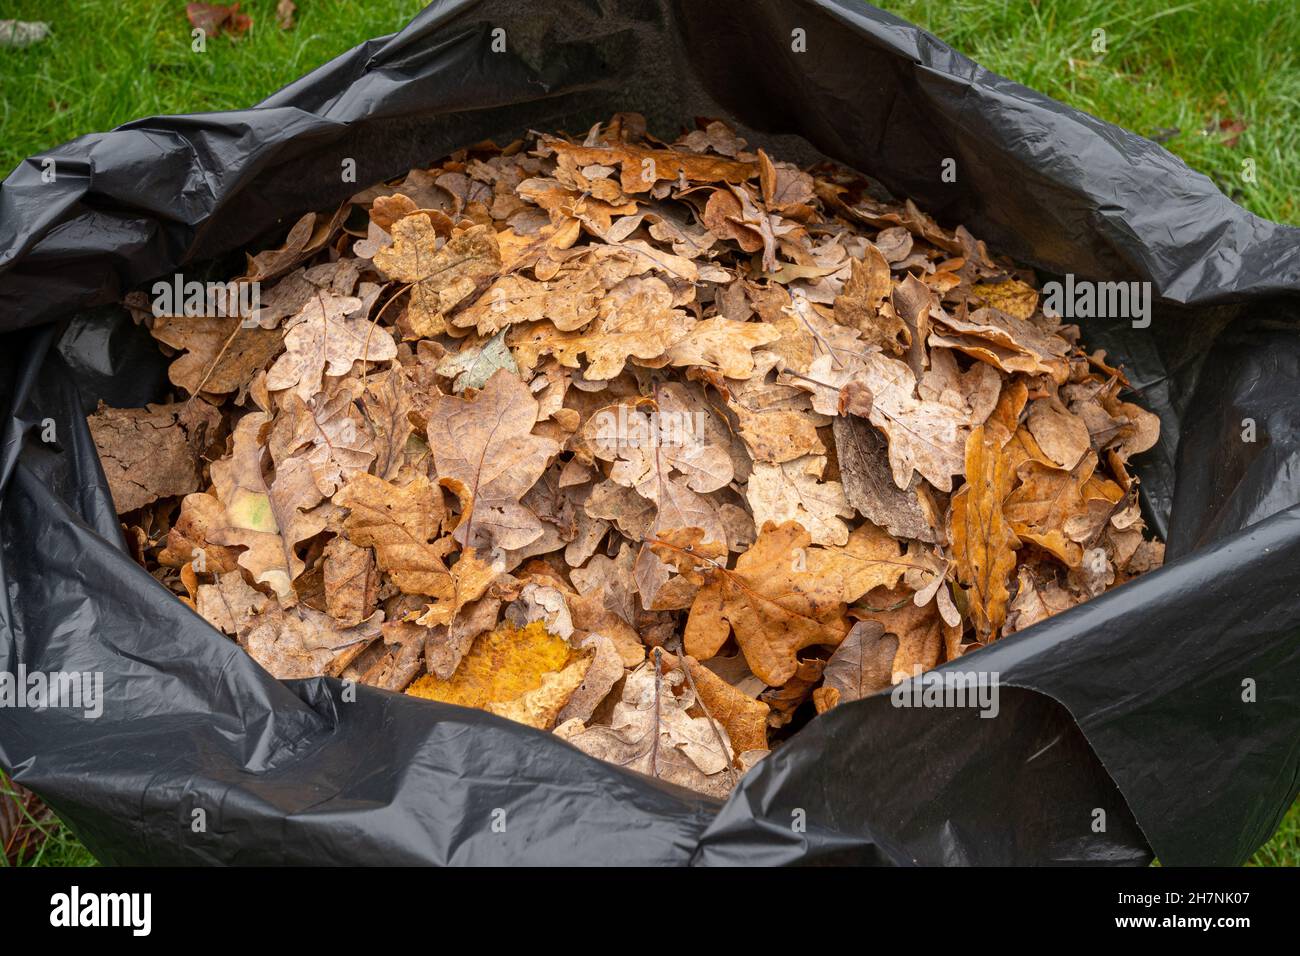 Black sack filled with fallen autumn leaves in a back garden, November, UK. Stock Photo